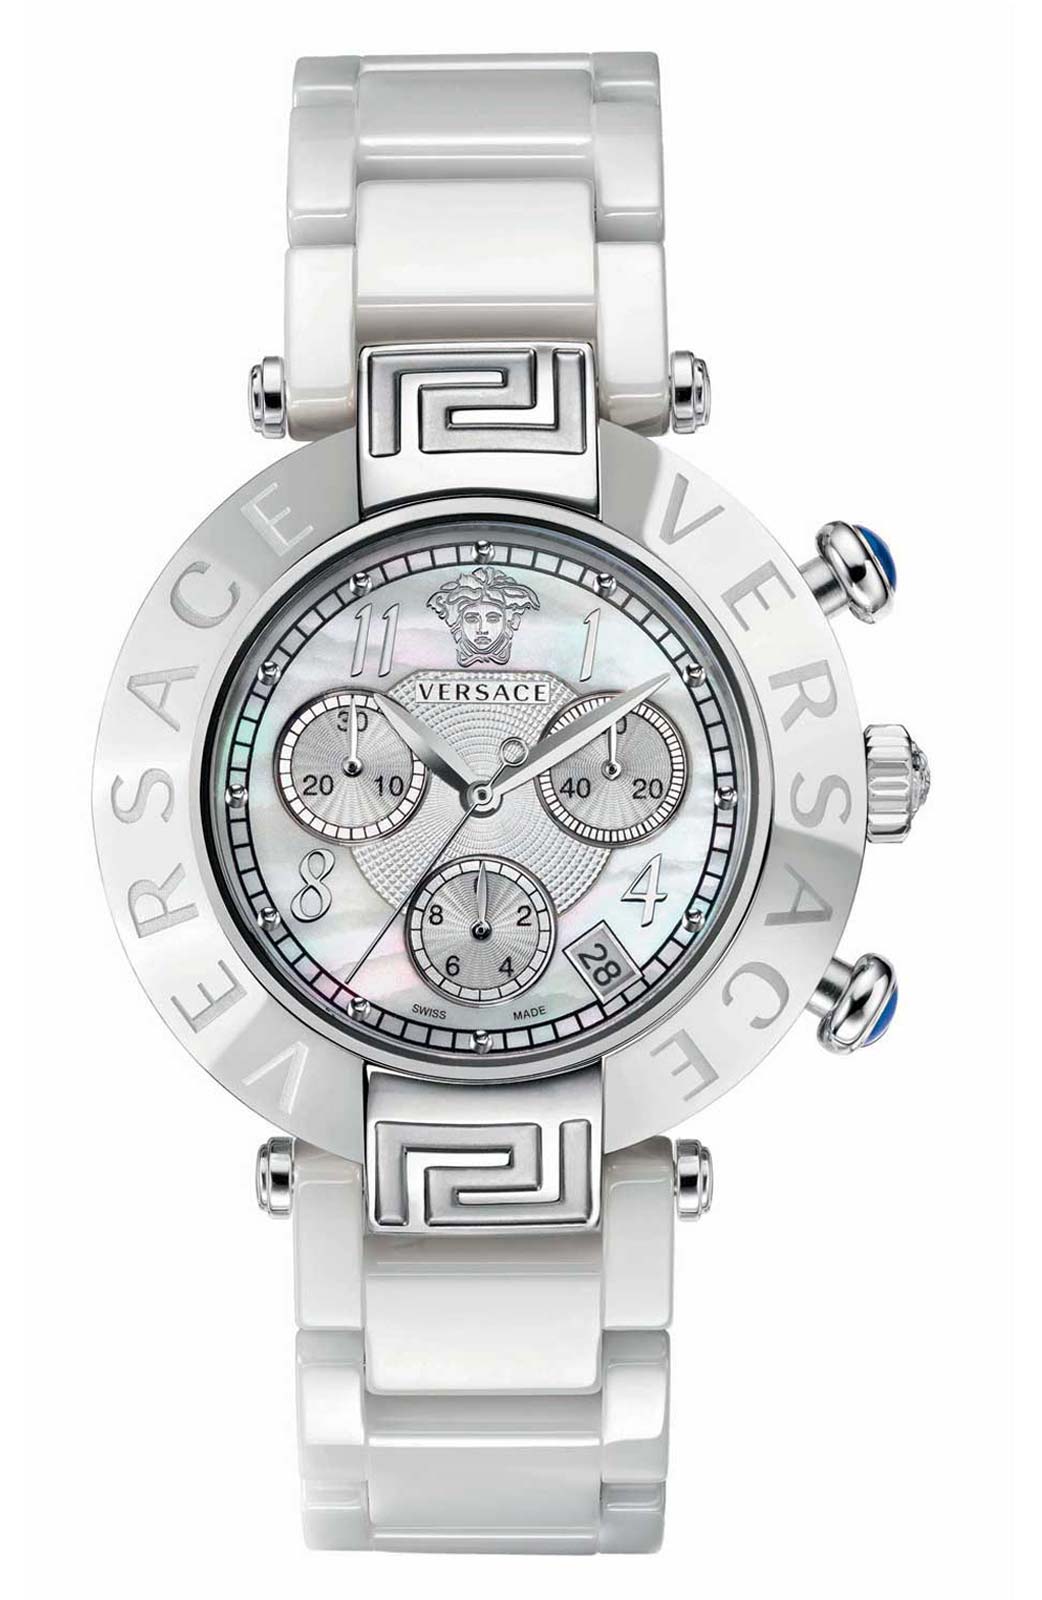 Versace QUARTZ watch 5040D WHITE CERAMIC BRACELET - Click Image to Close